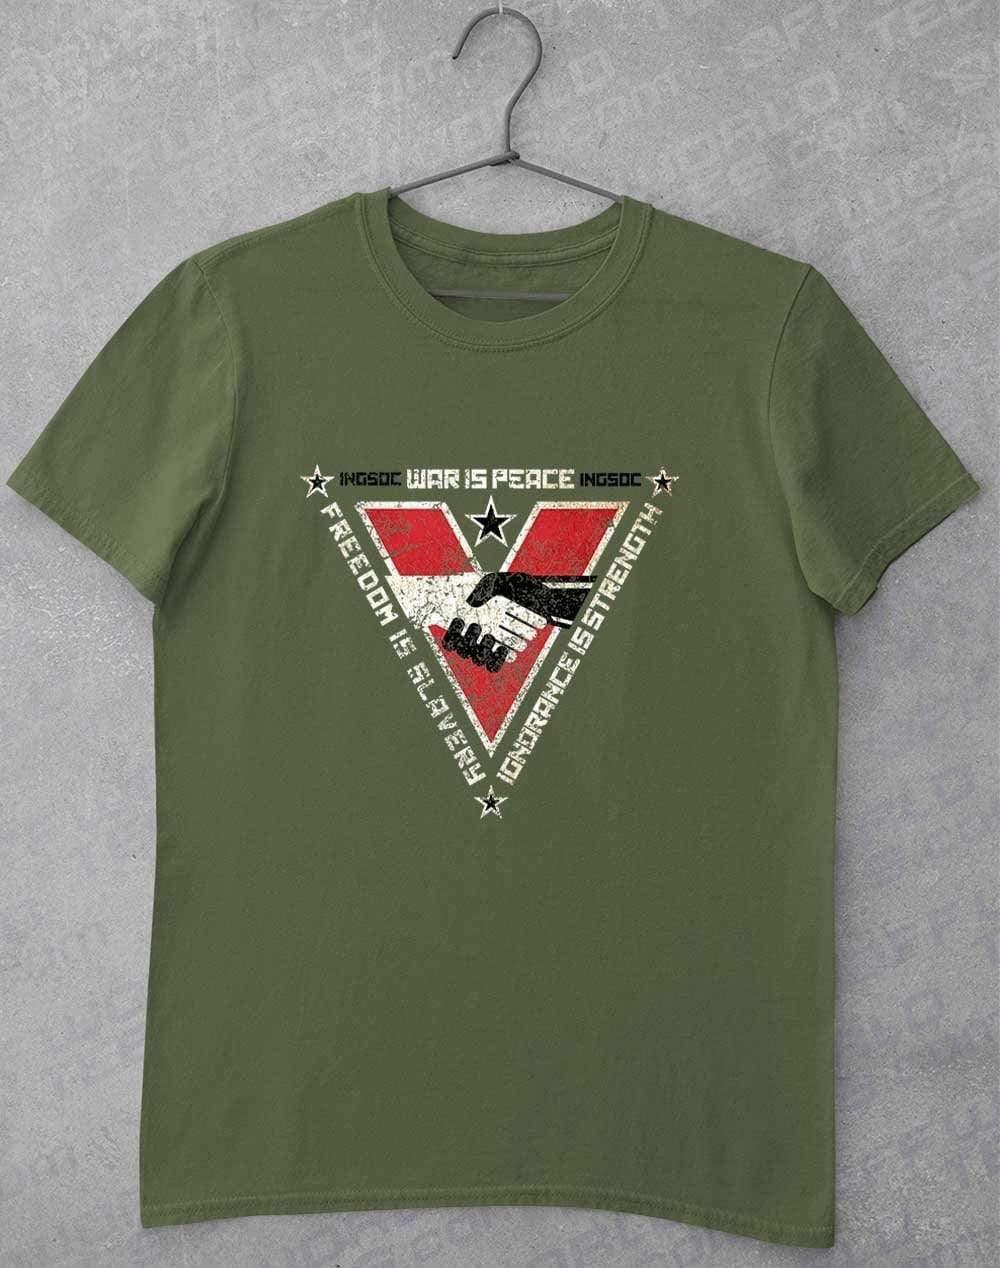 INGSOC Triangular Slogans T-Shirt S / Military Green  - Off World Tees